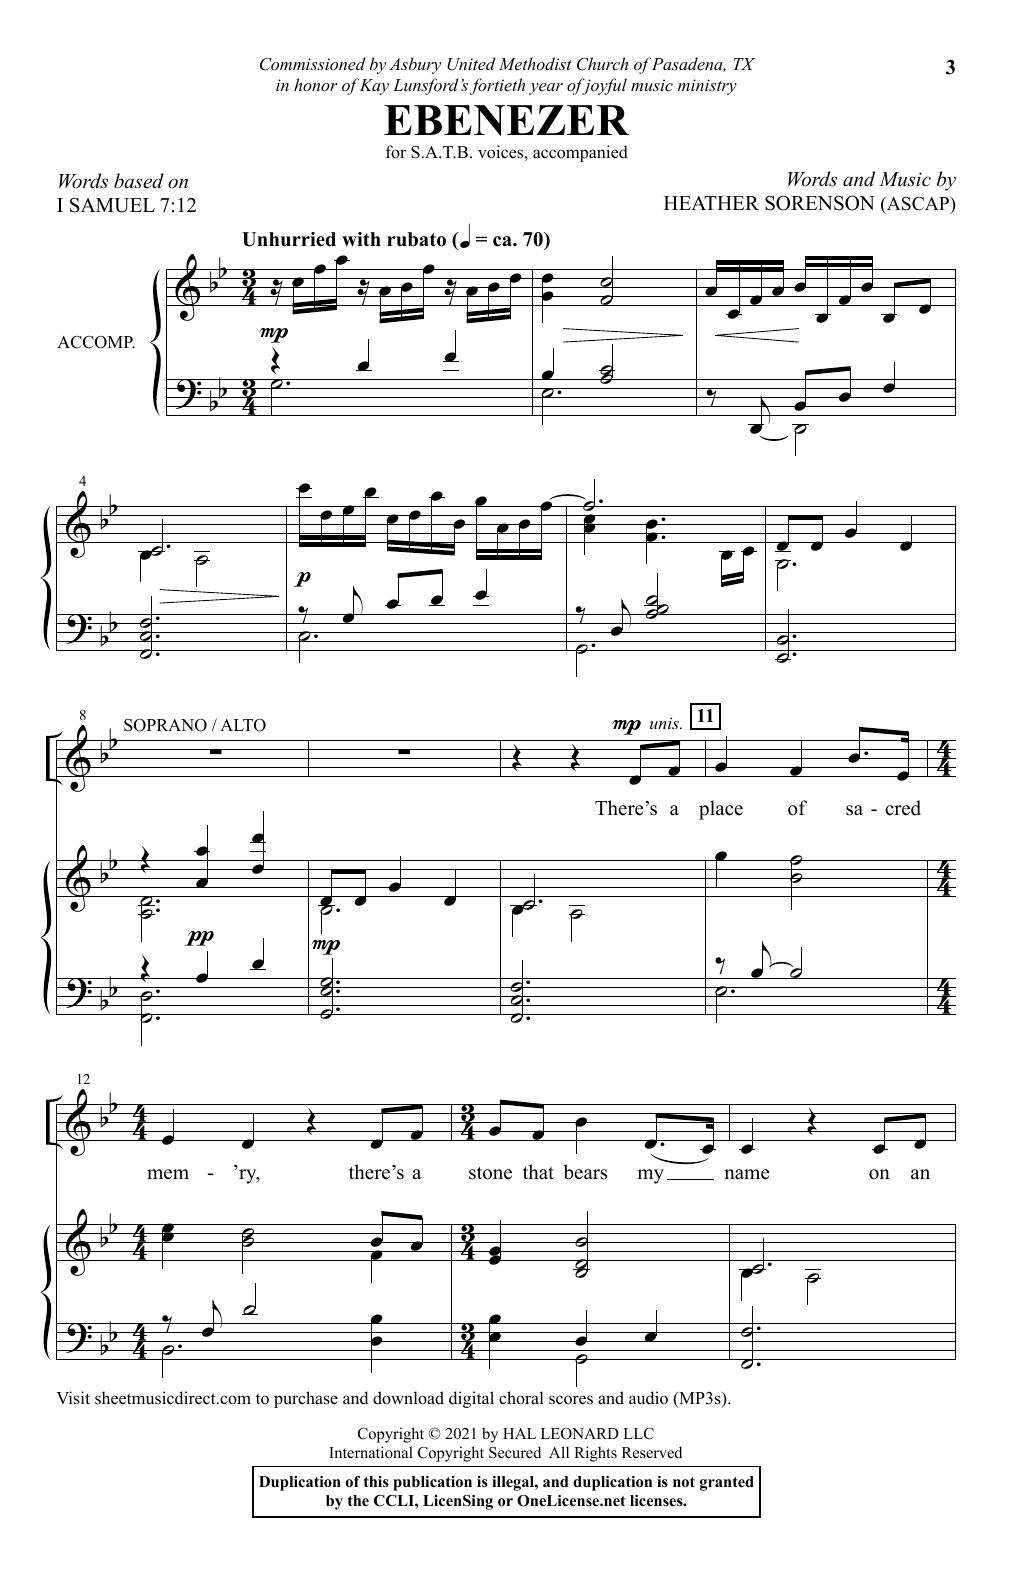 Heather Sorenson Ebenezer Sheet Music Notes & Chords for SATB Choir - Download or Print PDF